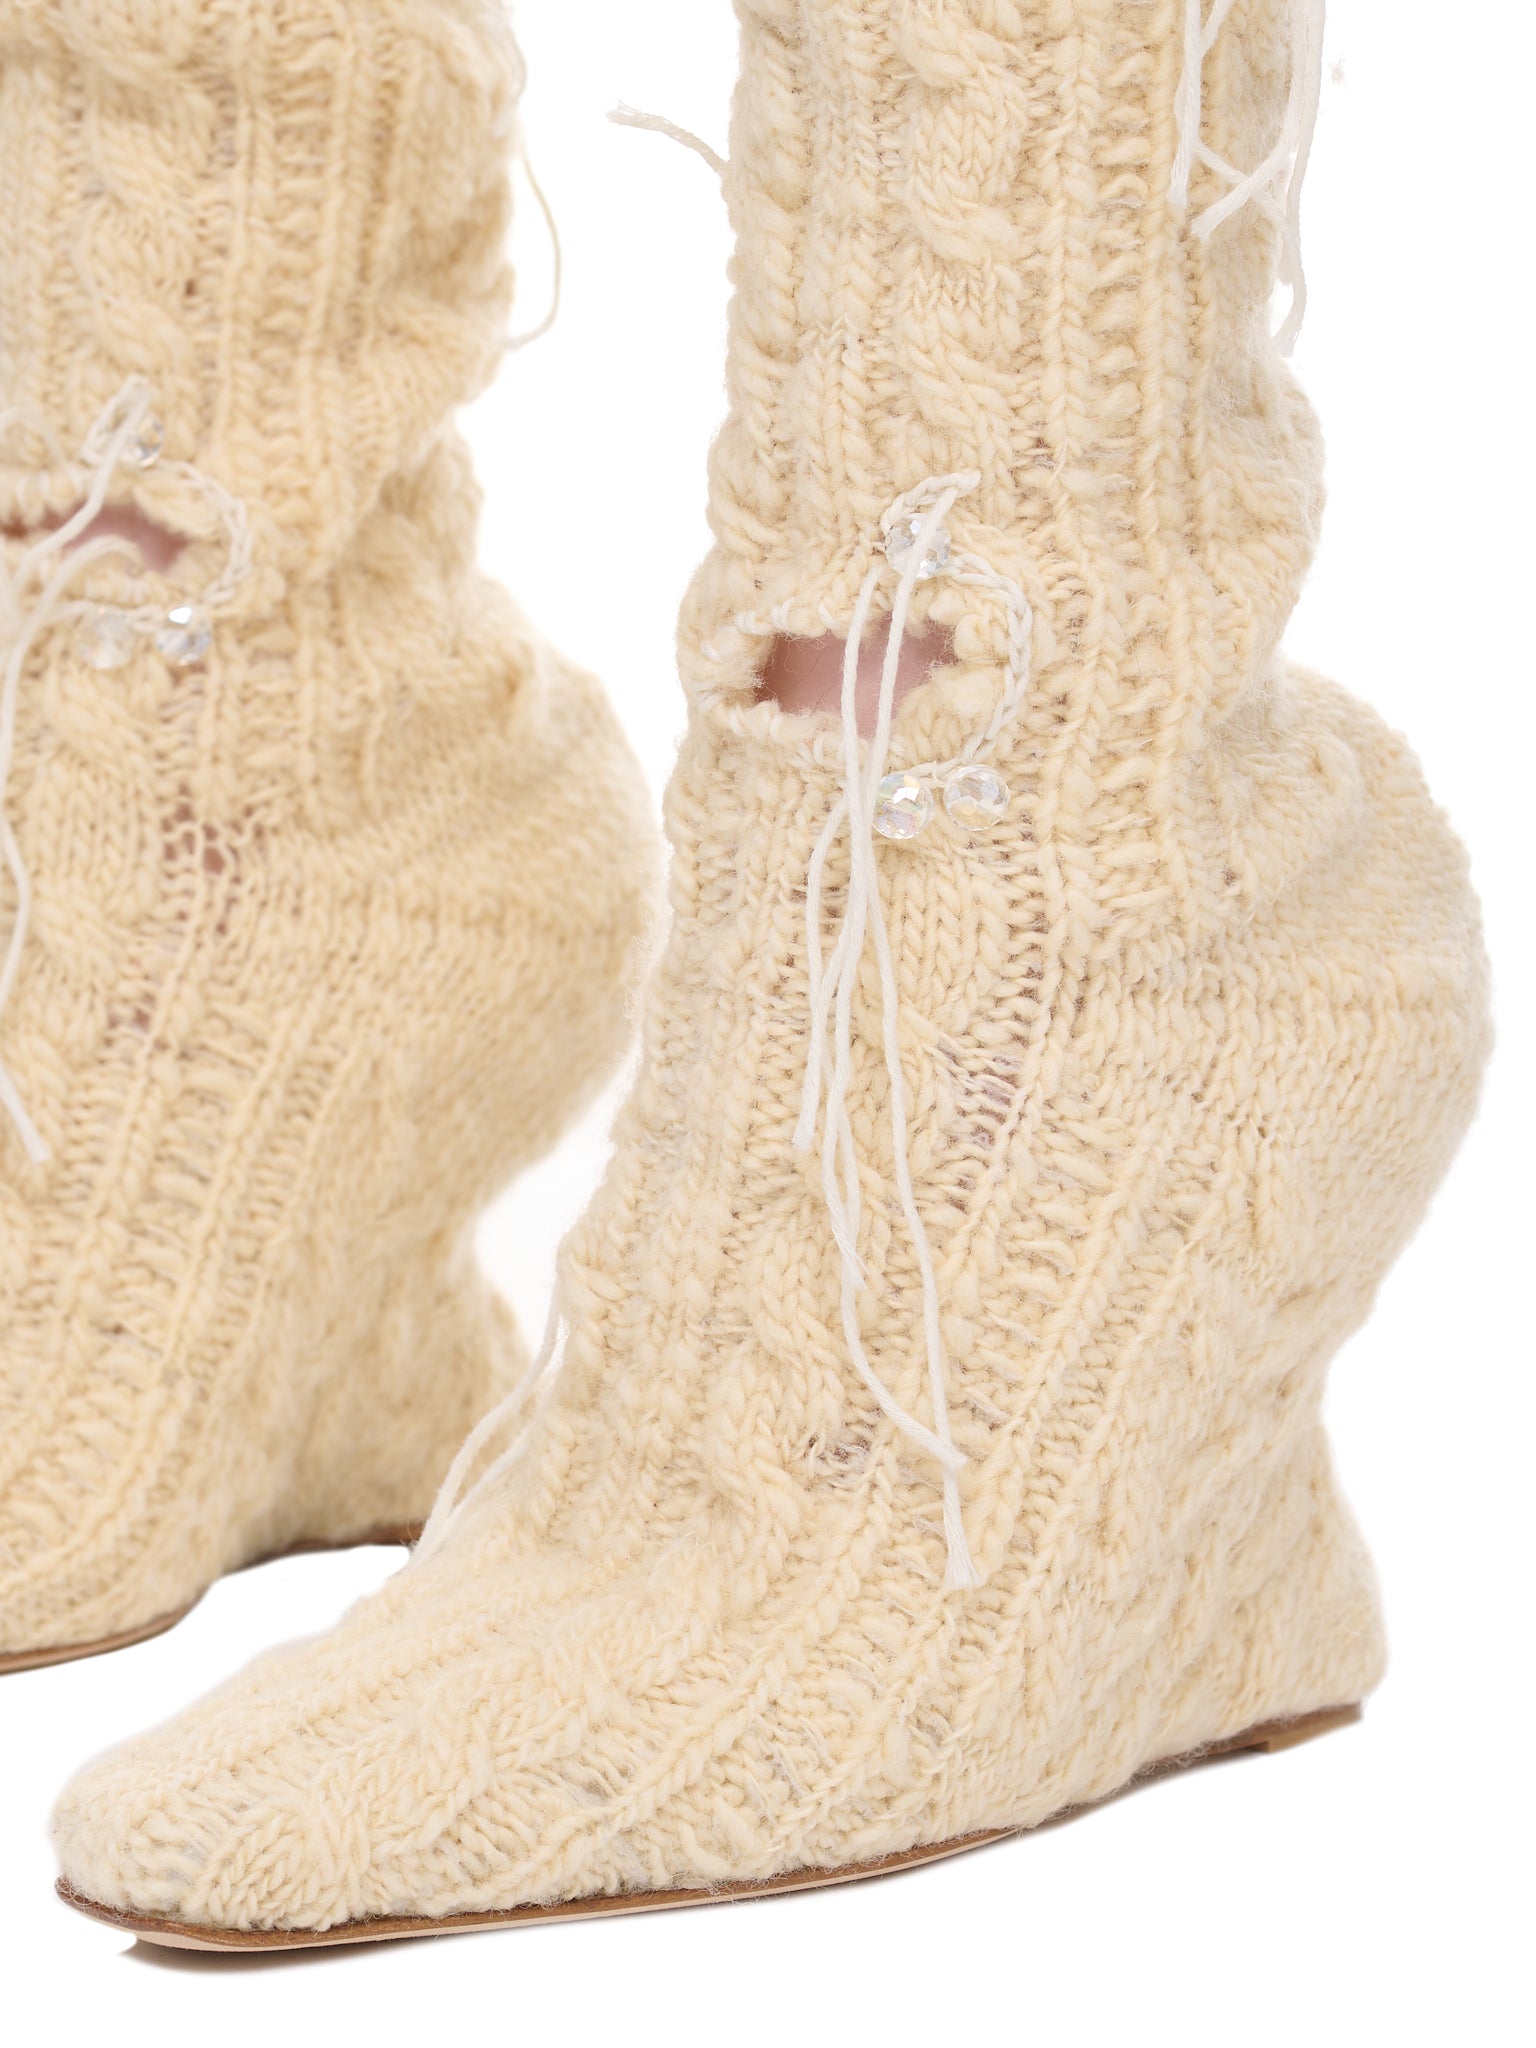 Distressed Sock Boots (SHOE000643-CREAM-BEIGE)